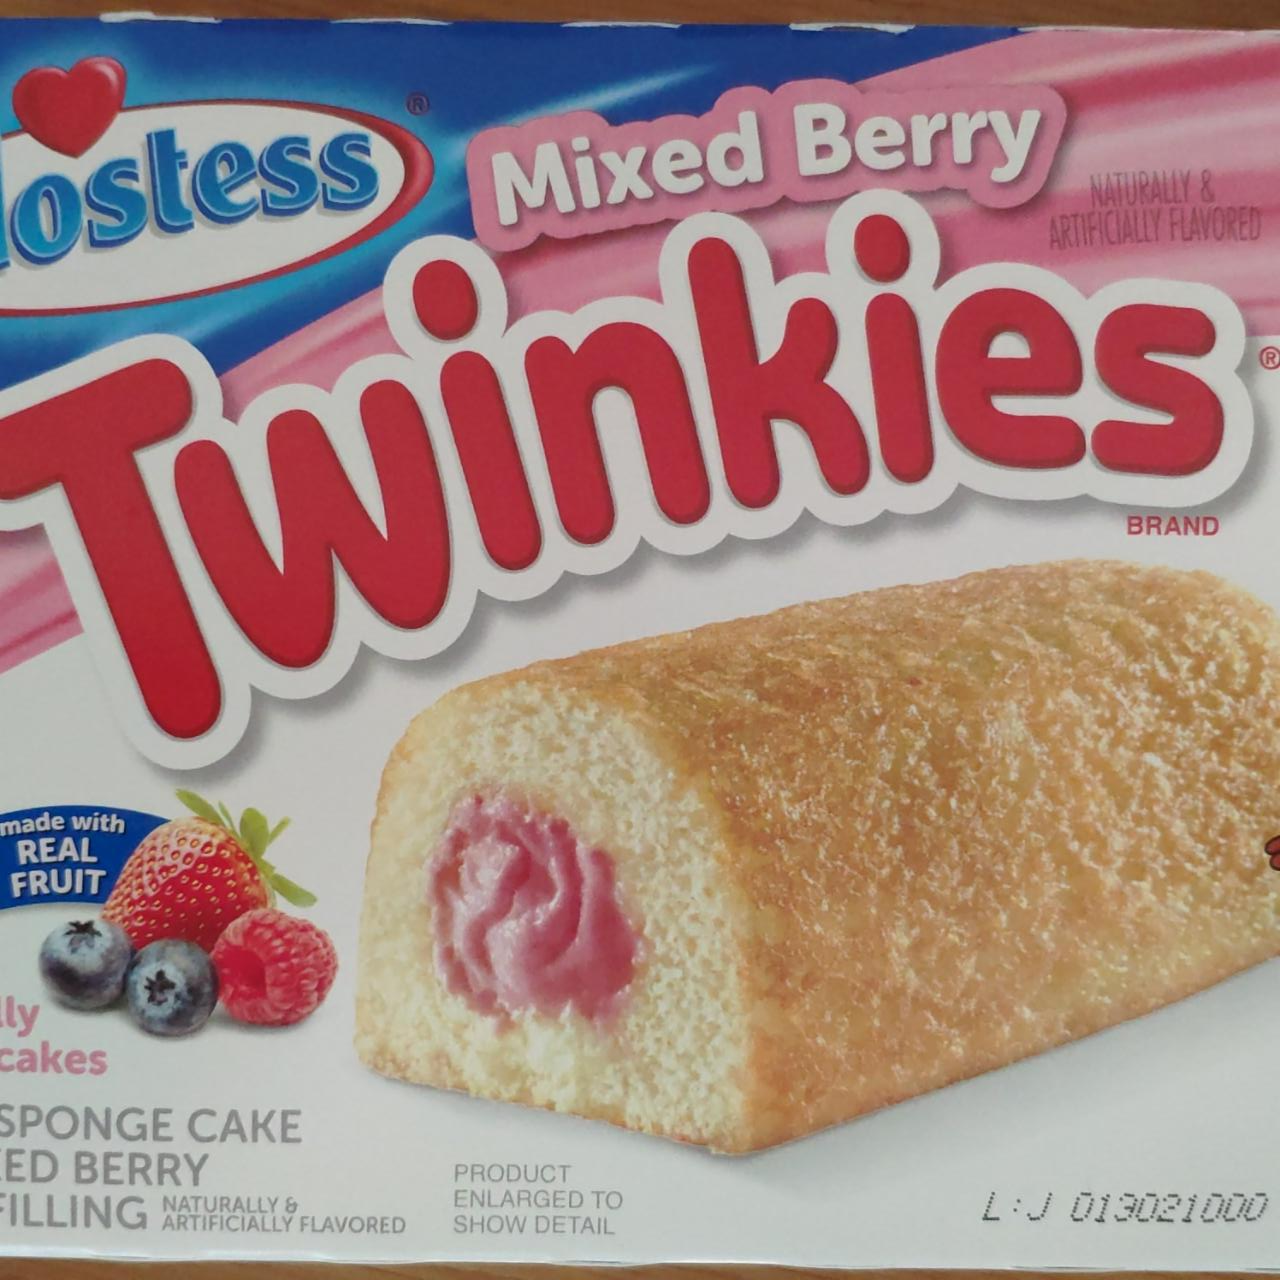 Fotografie - Twinkies Mixed Berry Hostess